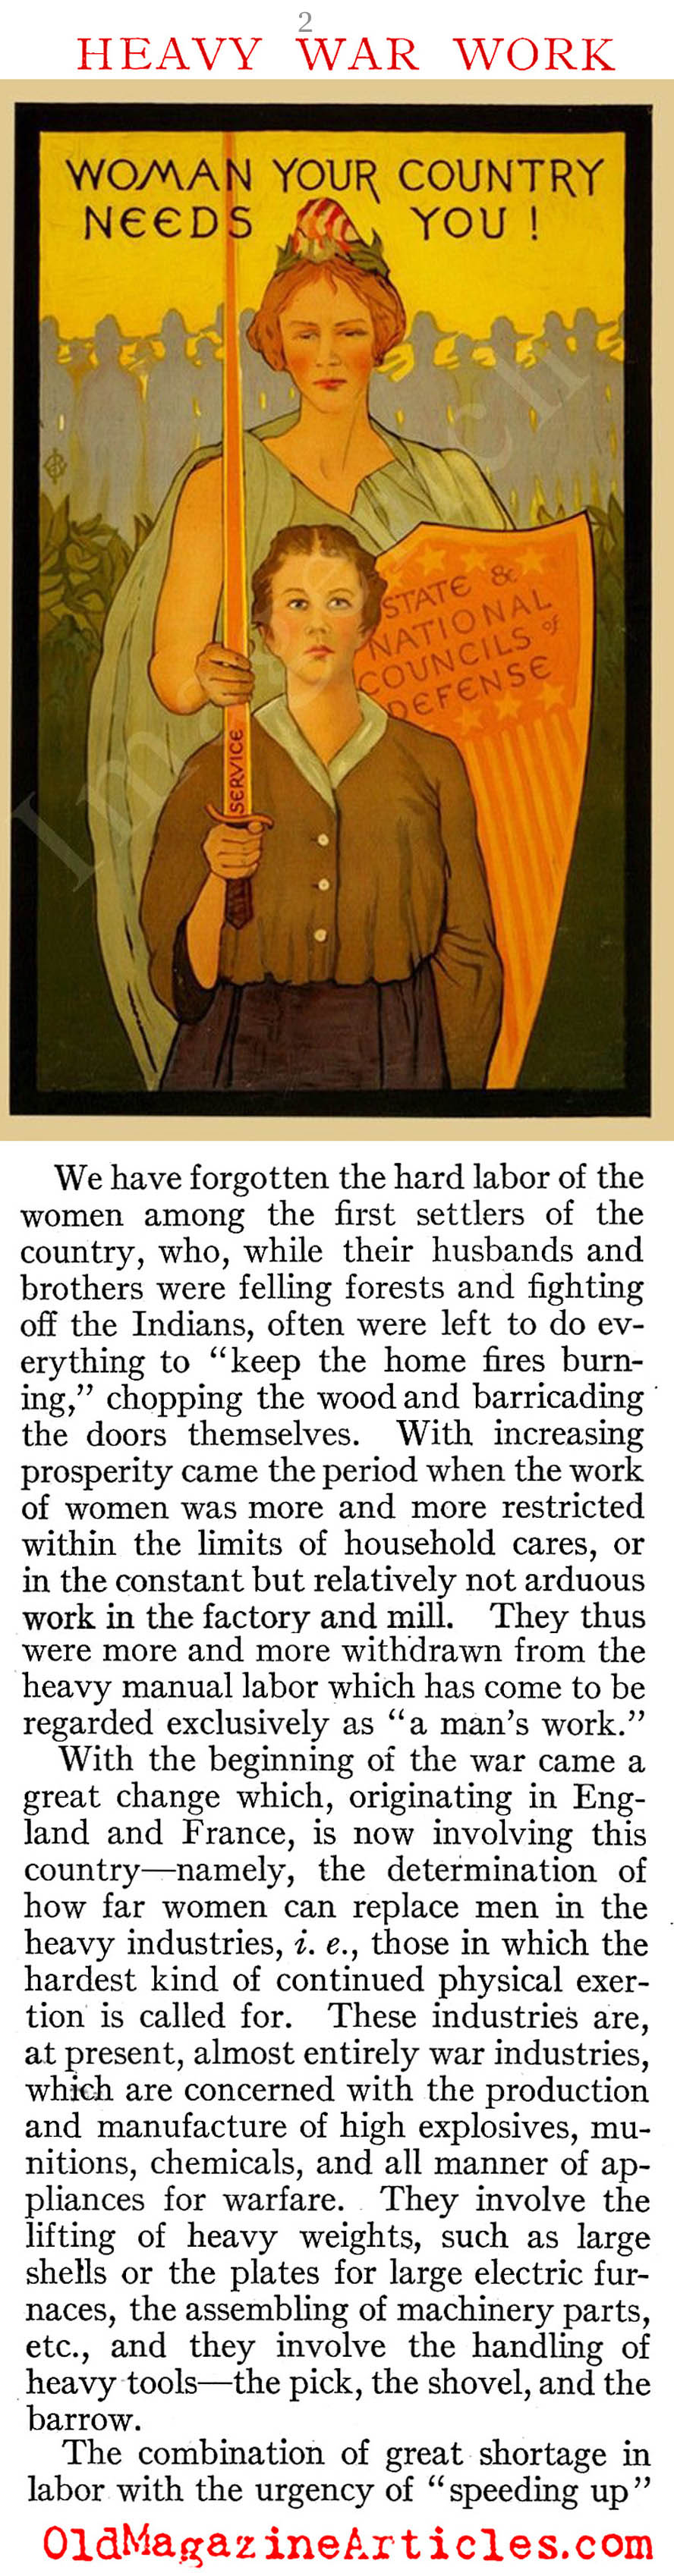 Women Can Do The Heavy War Work (Scribner's Magazine, 1919)